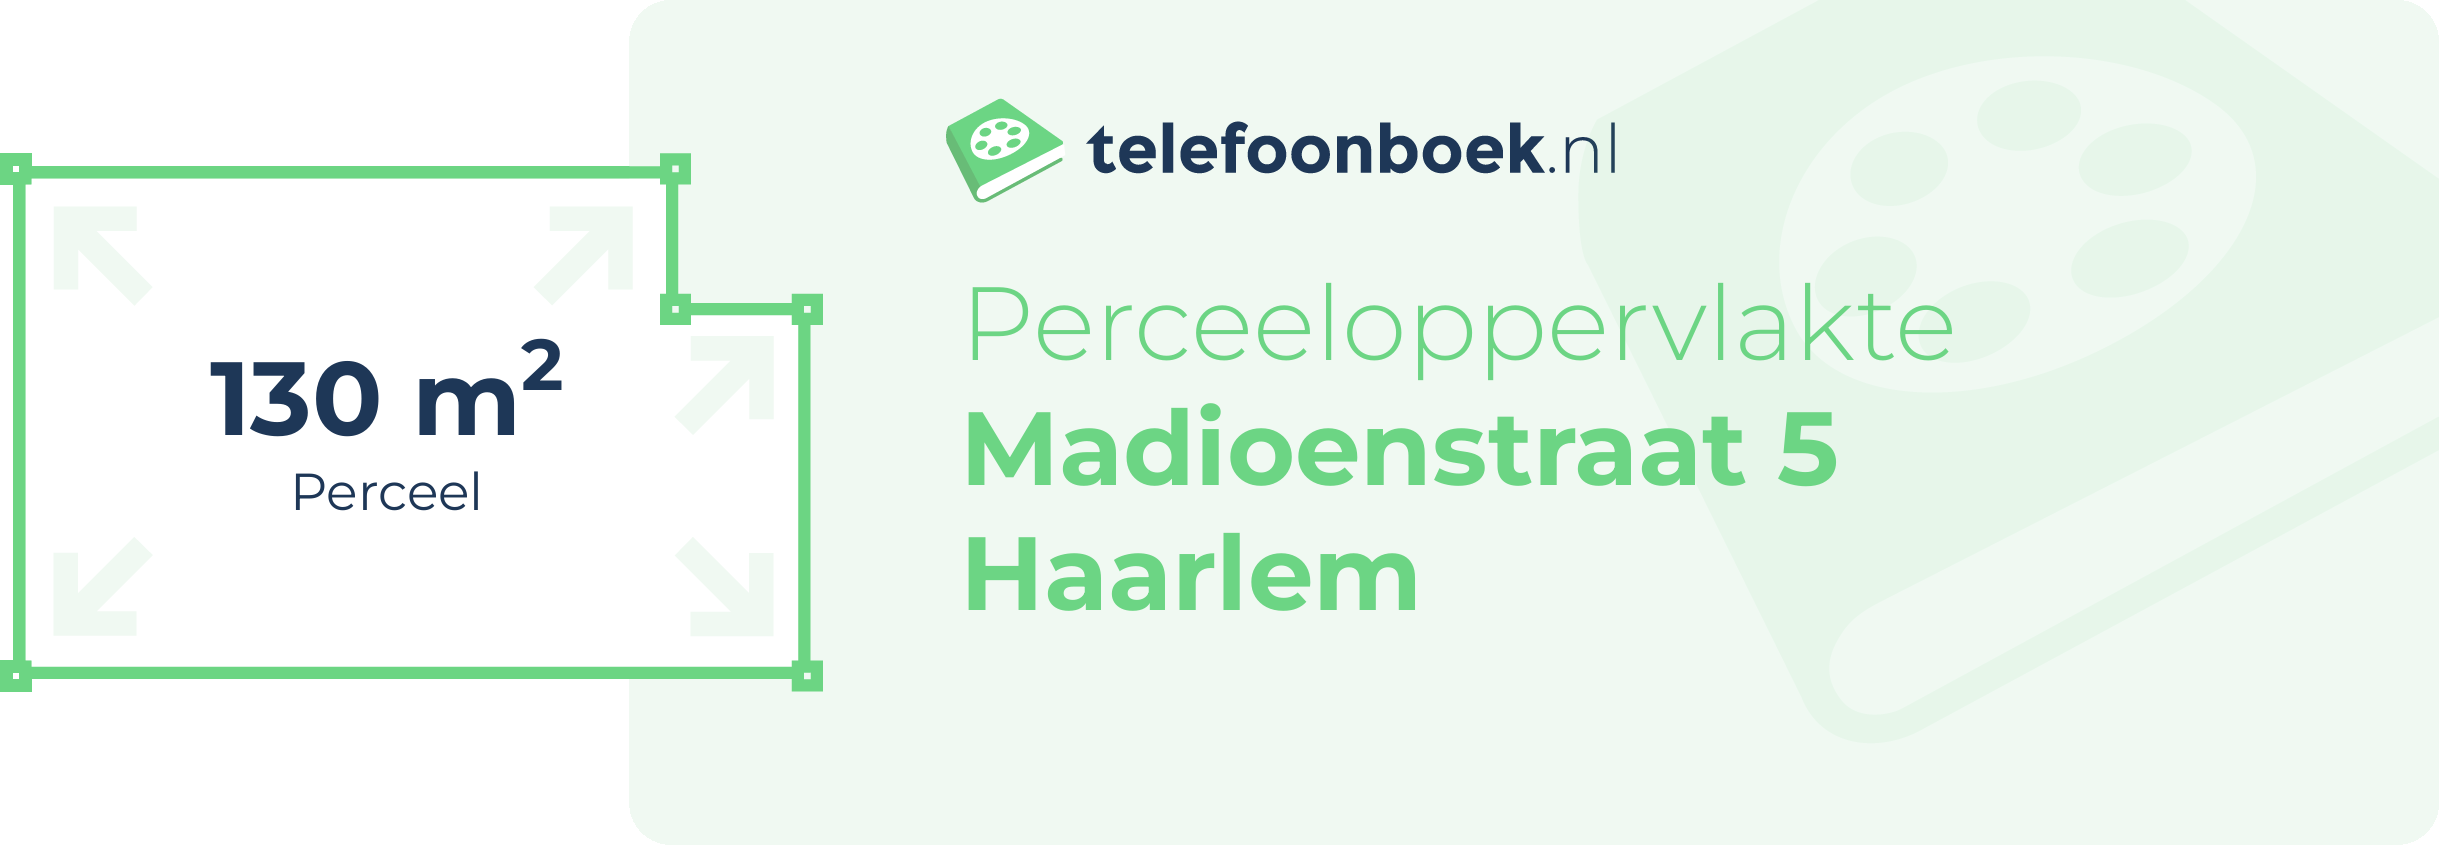 Perceeloppervlakte Madioenstraat 5 Haarlem